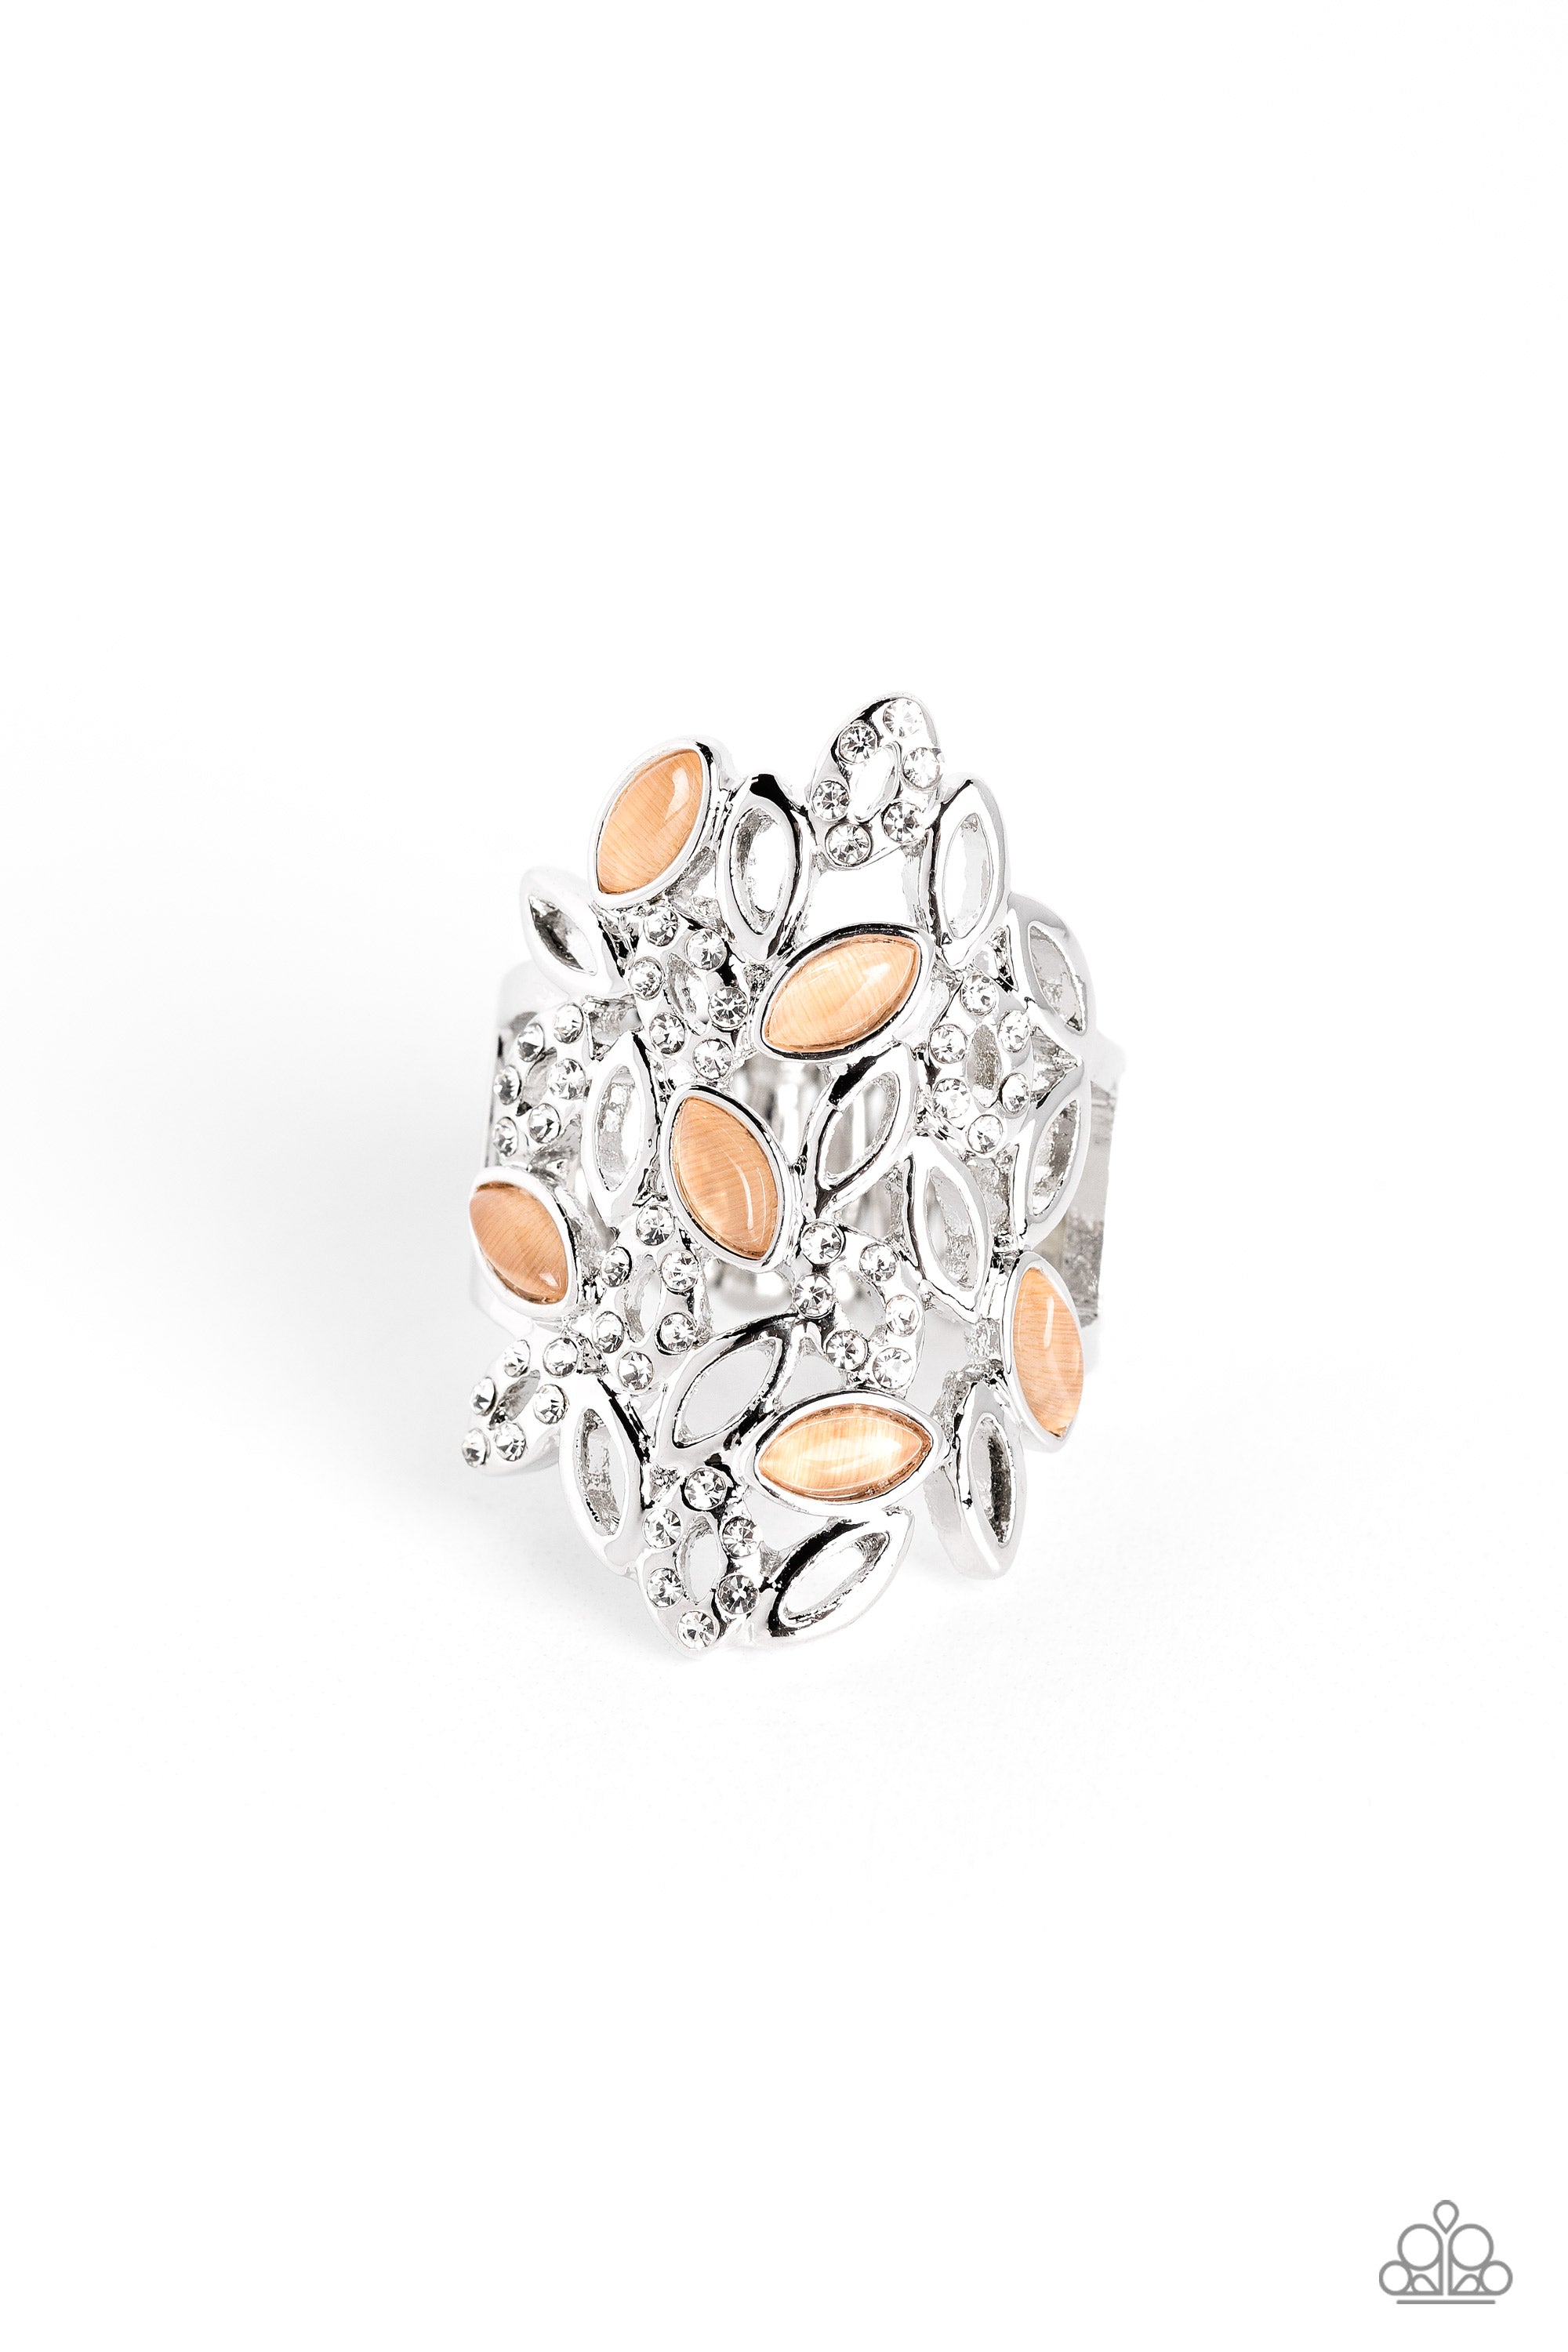 LEAF Home Orange Cat's Eye Stone Ring - Paparazzi Accessories- lightbox - CarasShop.com - $5 Jewelry by Cara Jewels